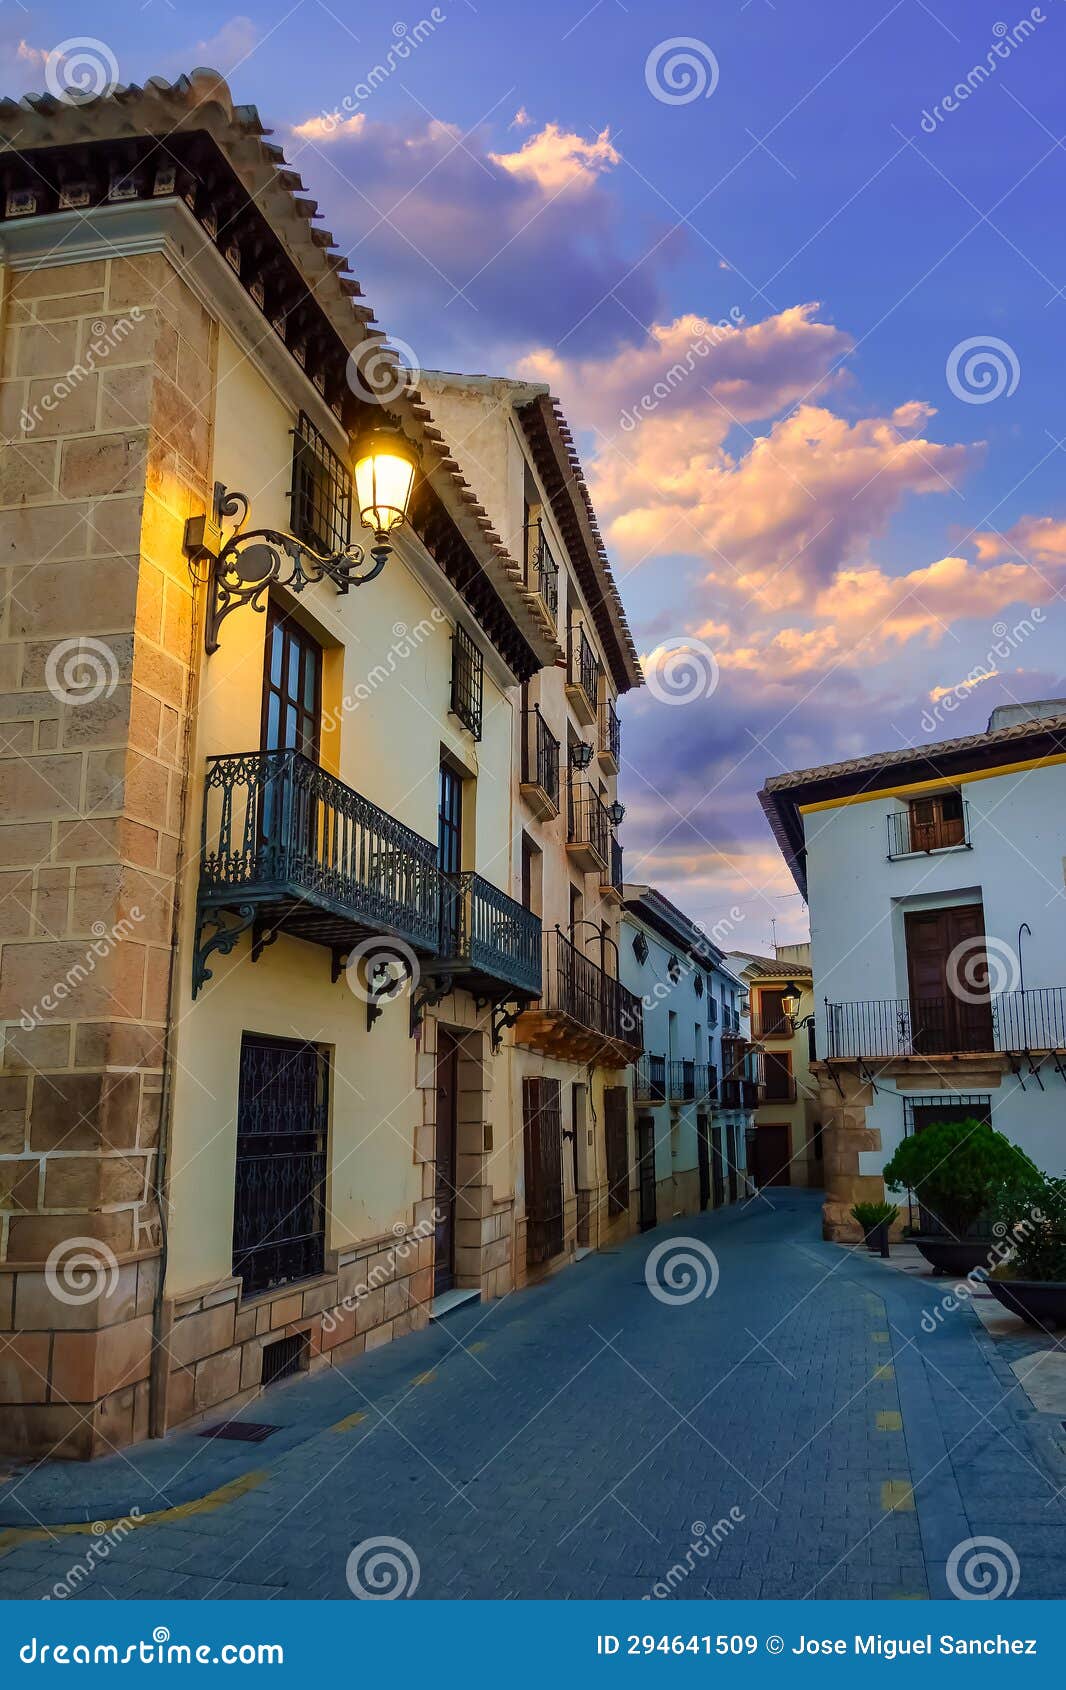 quaint houses with lit street lamps in a white village of almeria, velez rubio, spain.